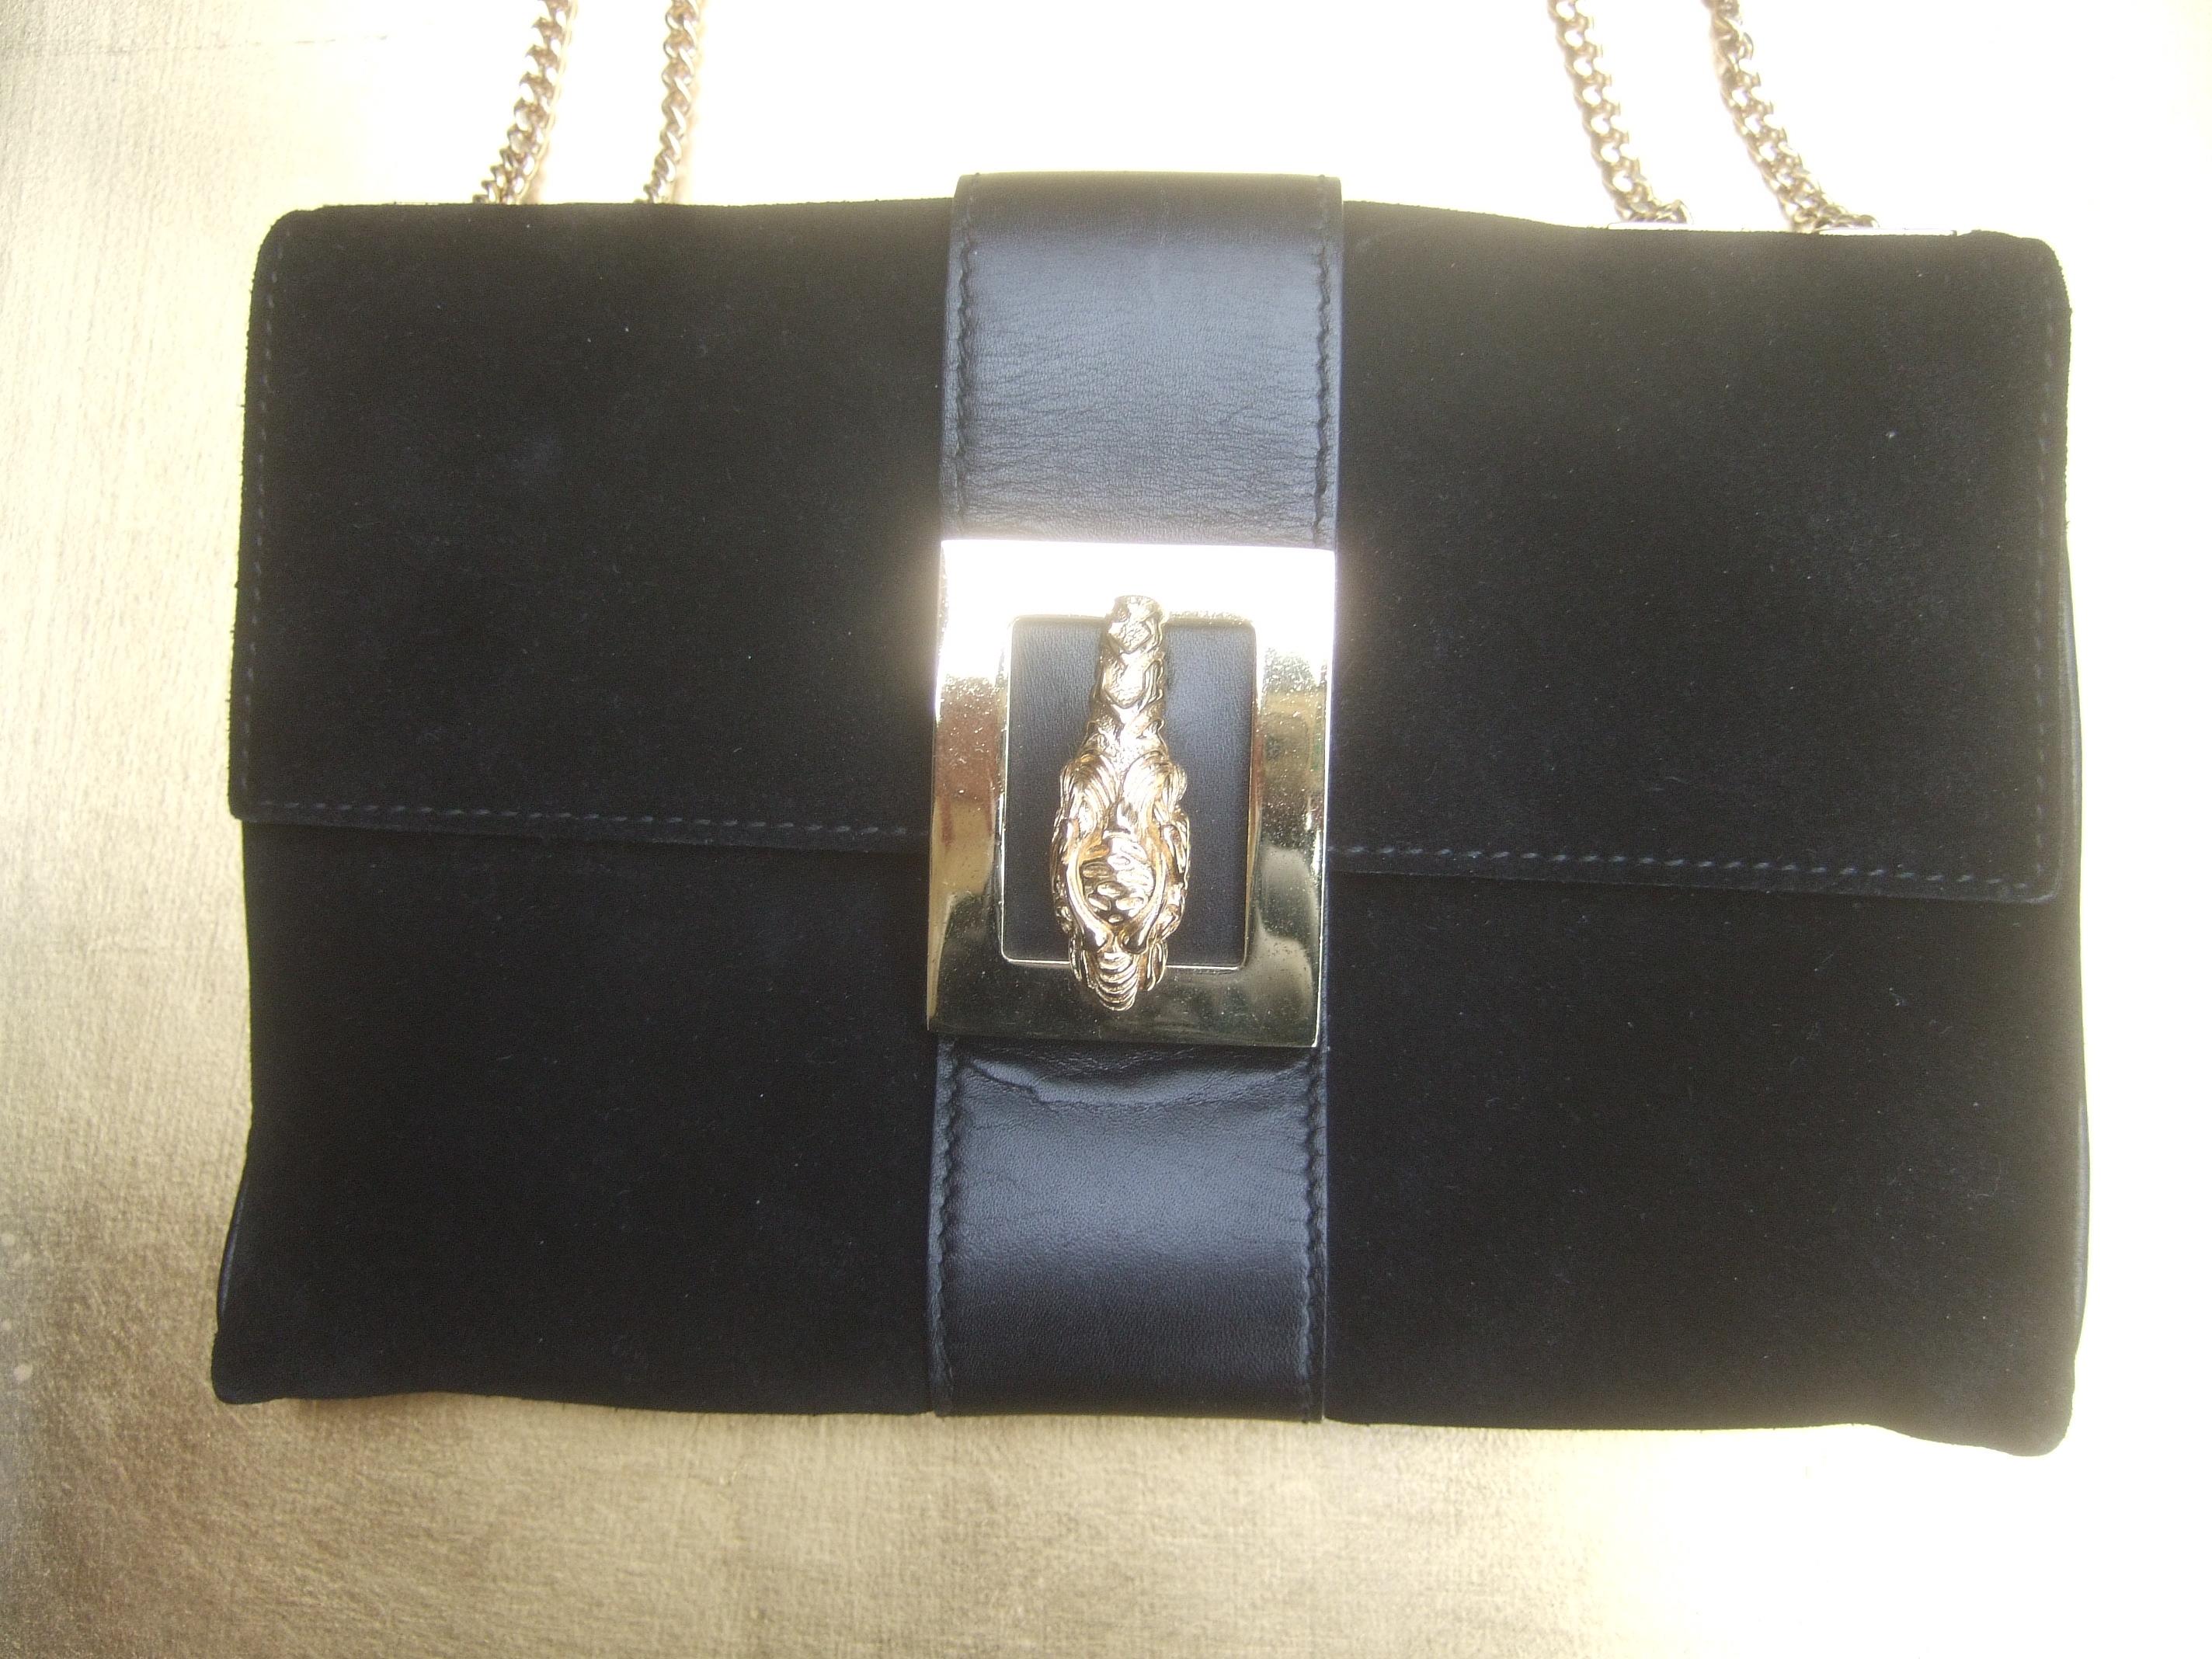 Gucci Black Suede Gilt Tiger Emblem Handbag Tom Ford Era c 1990s 8